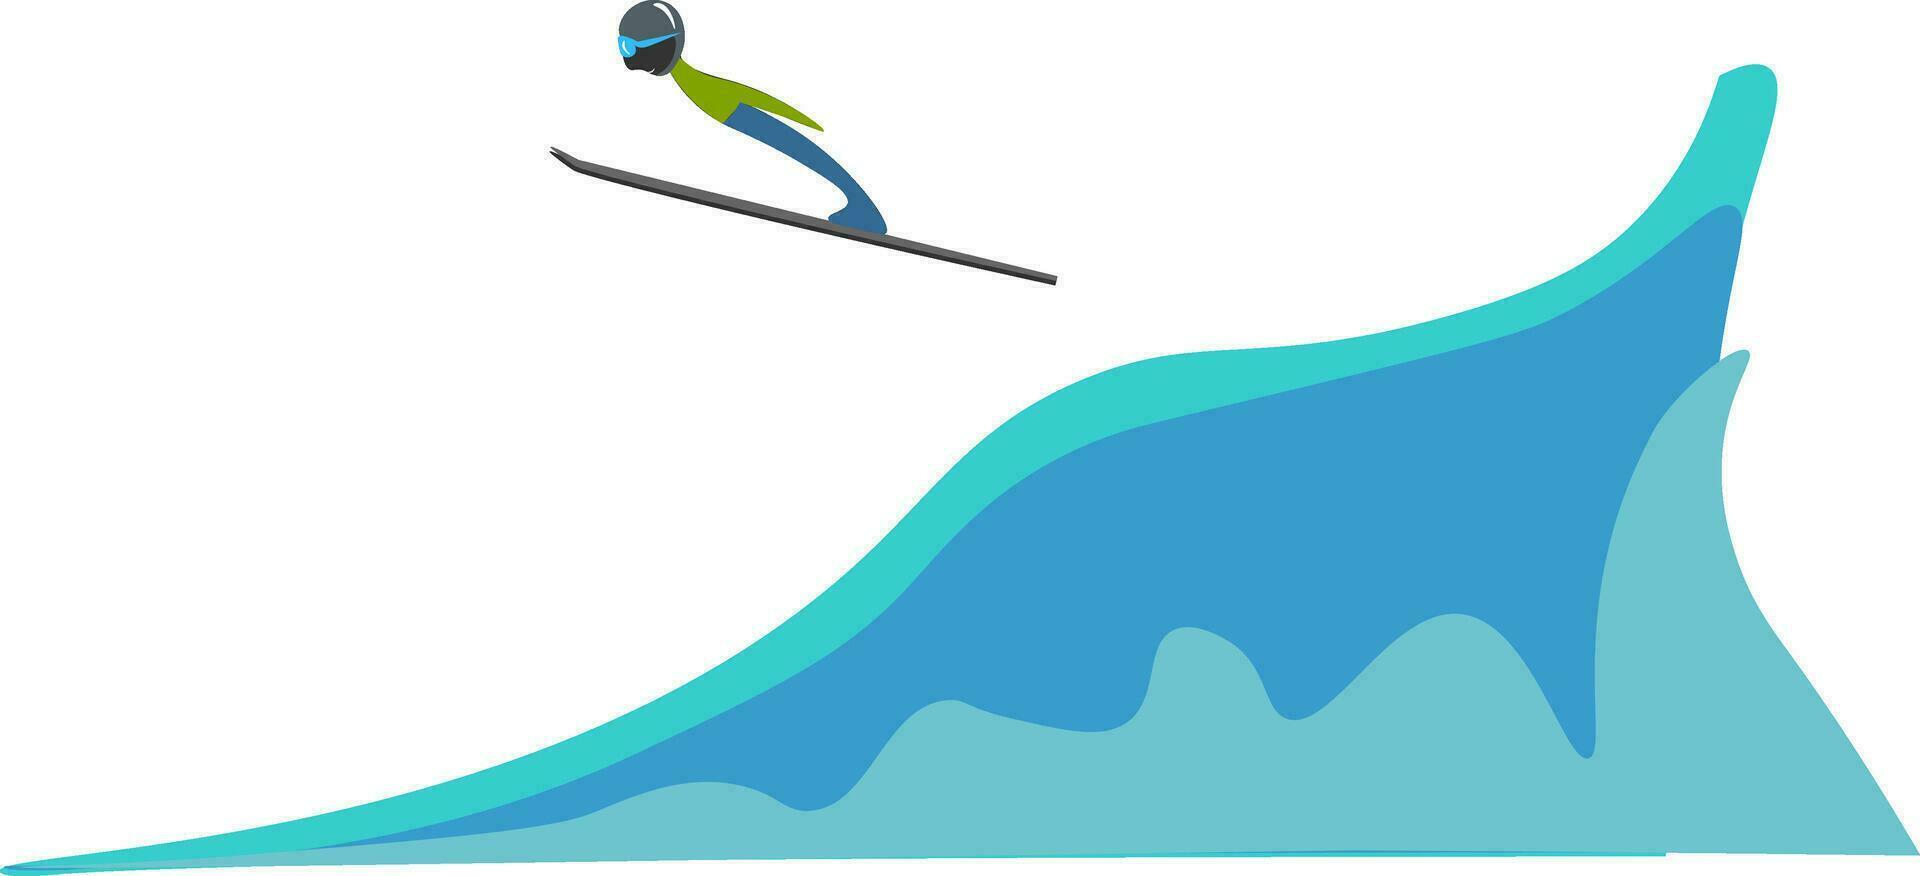 Ski jumping, vector or color illustration.